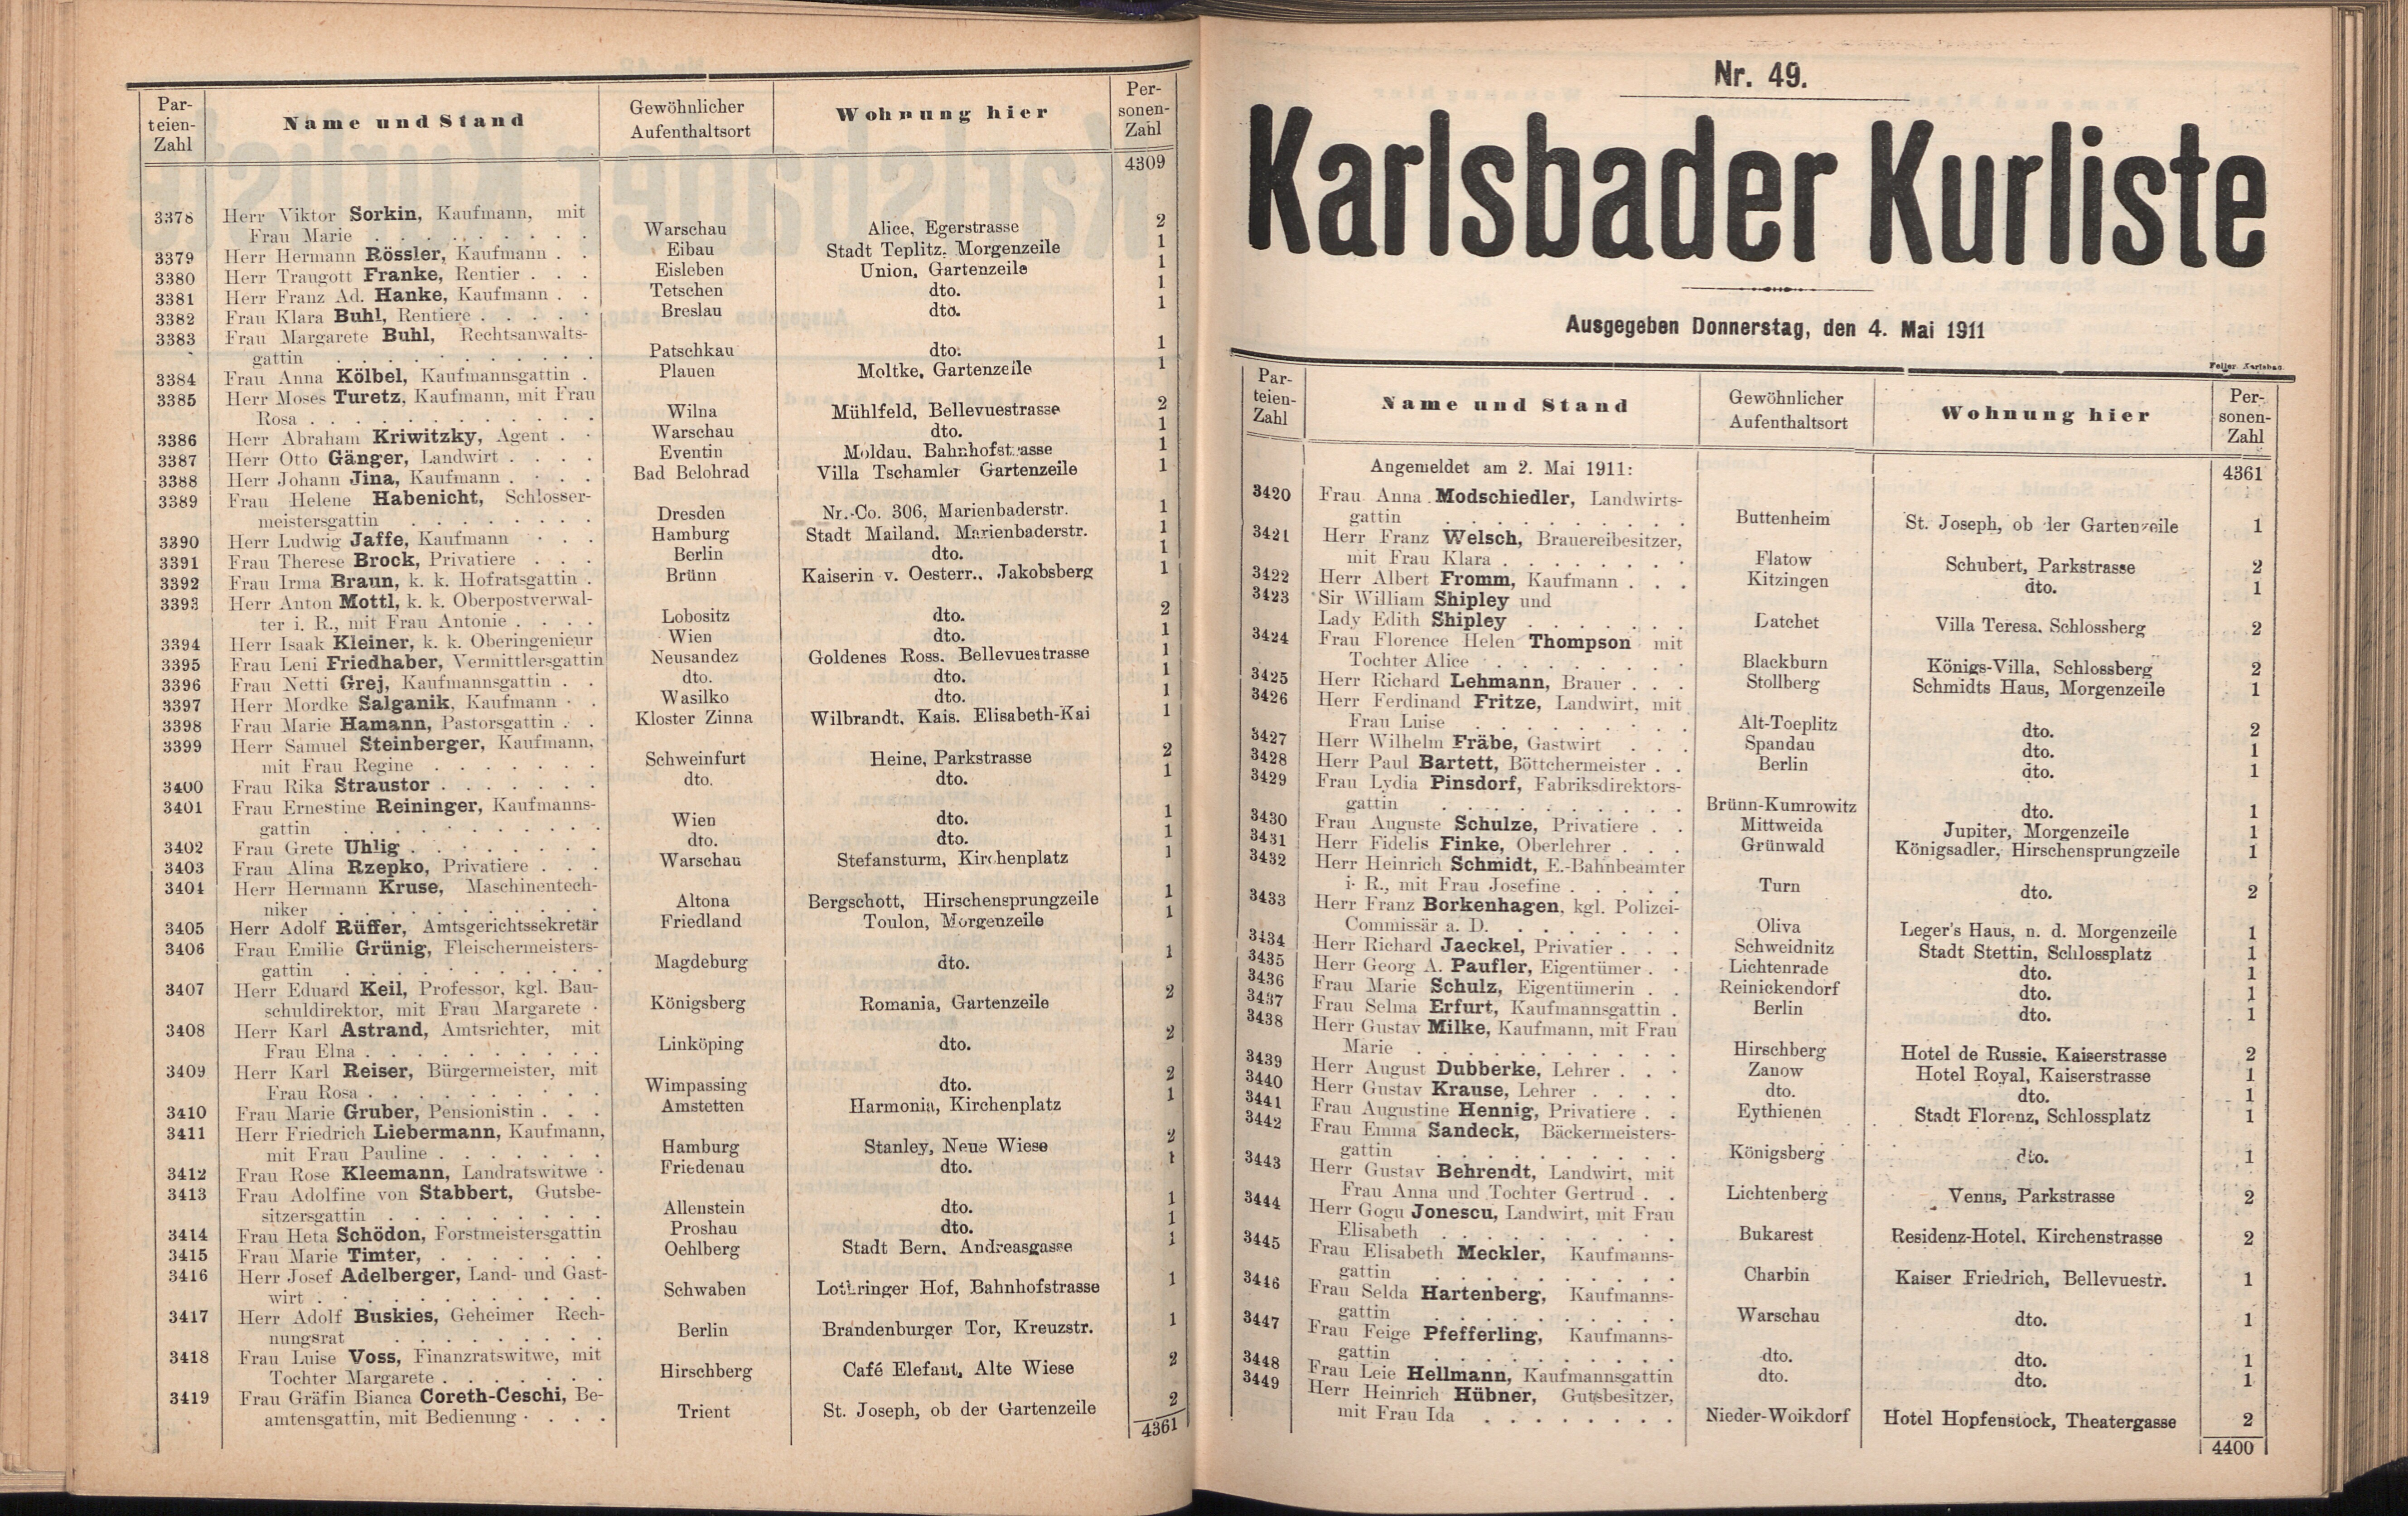 153. soap-kv_knihovna_karlsbader-kurliste-1911-1_1540